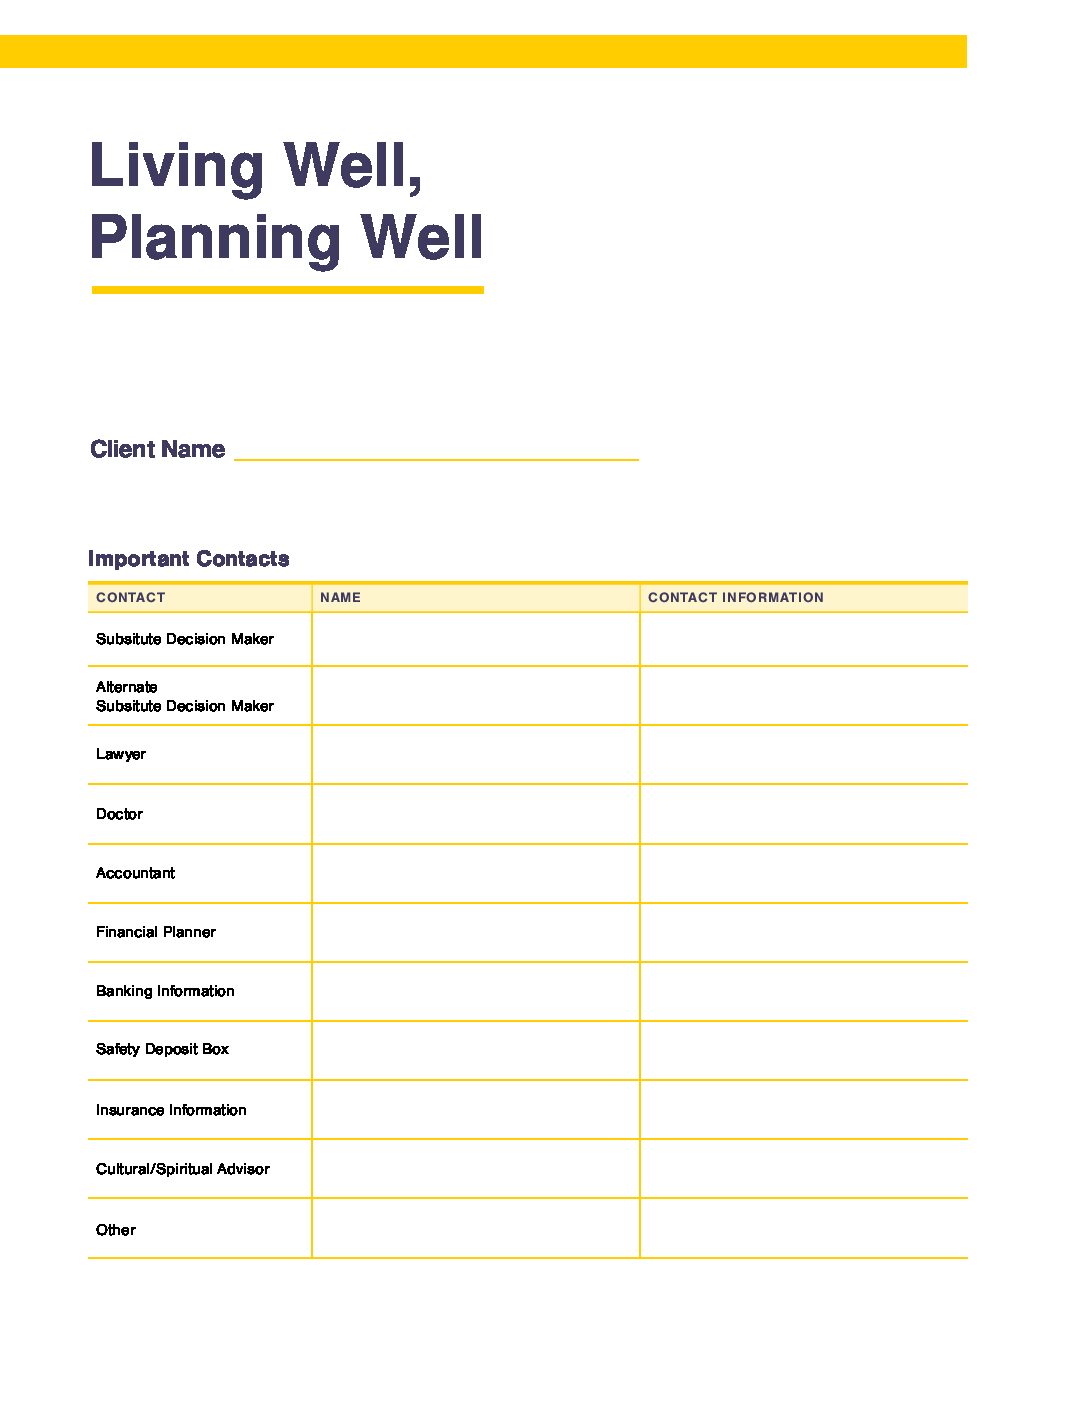 Living Well, Planning Well - Fillable Sheet